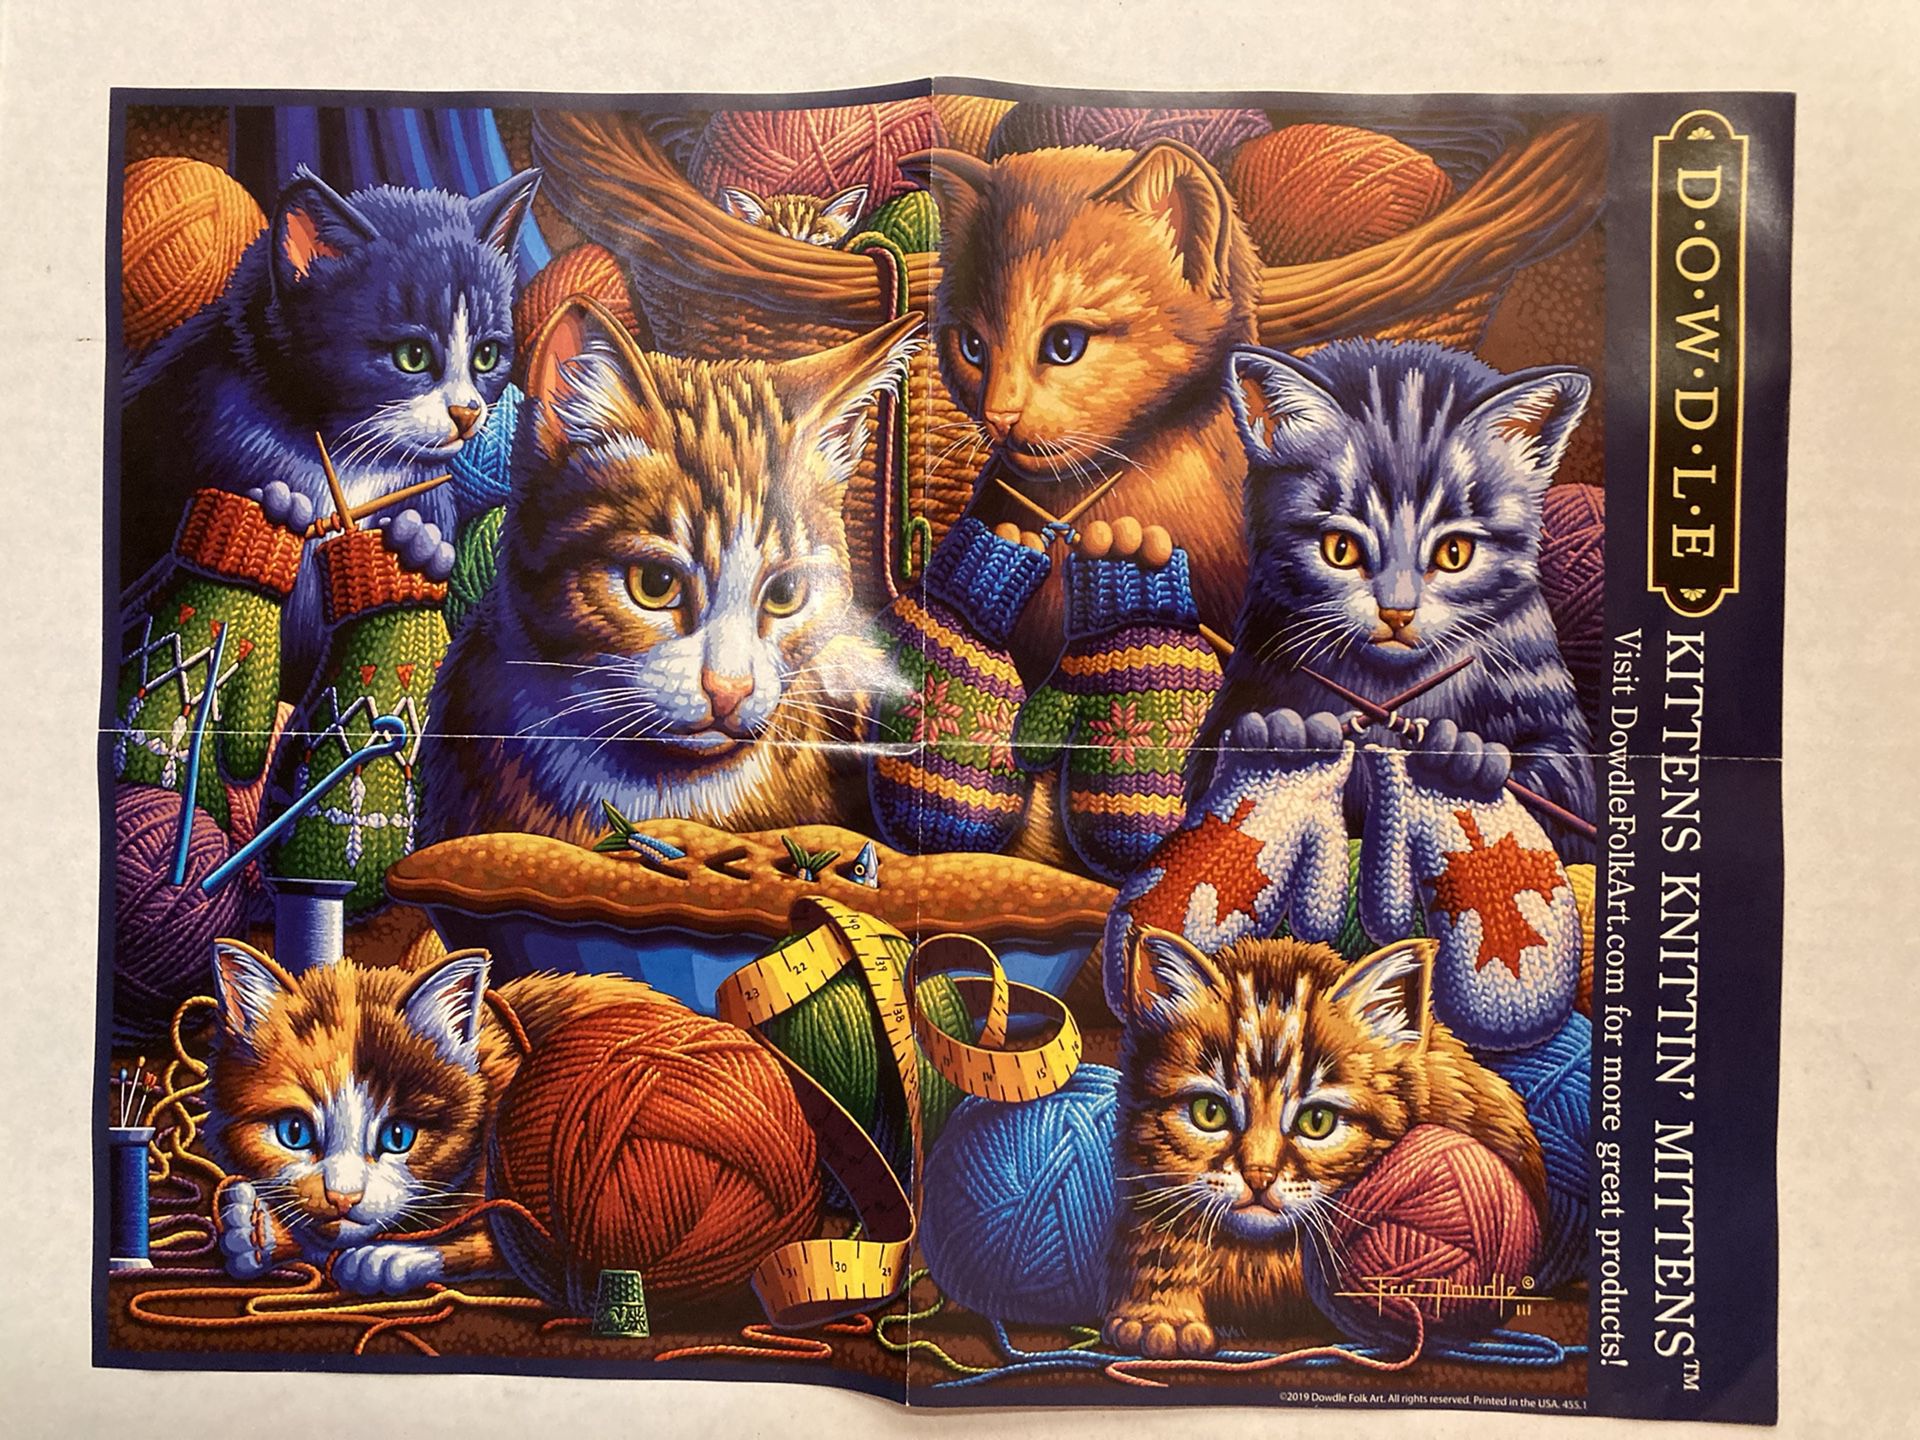 New Sealed Dowdle Kittens Knittin' Mittens 300 Piece Cat Yarn Puzzle 16x20 USA